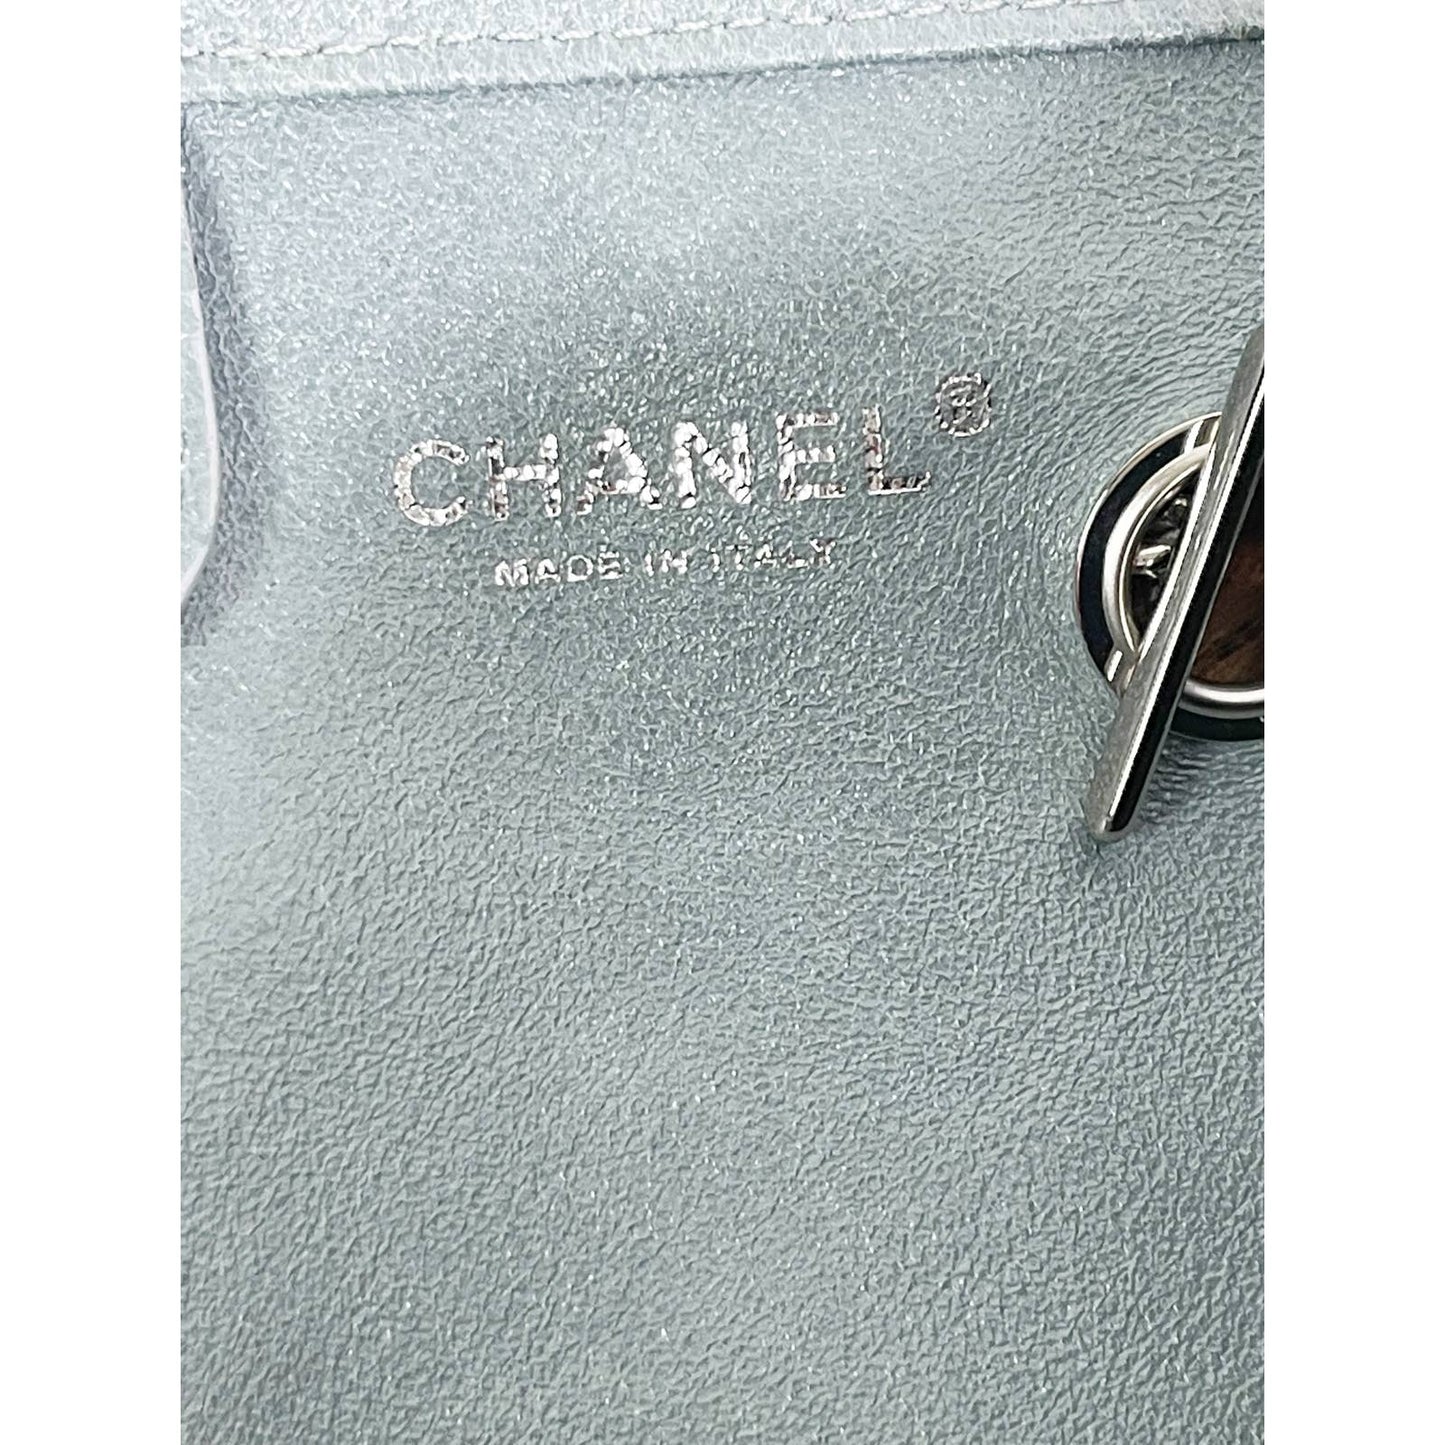 CHANELChanel Vintage Camilia Chain Strap Tote Bag / Handbag - Karl Lagerfeld - Rare! - Black Dog Vintage